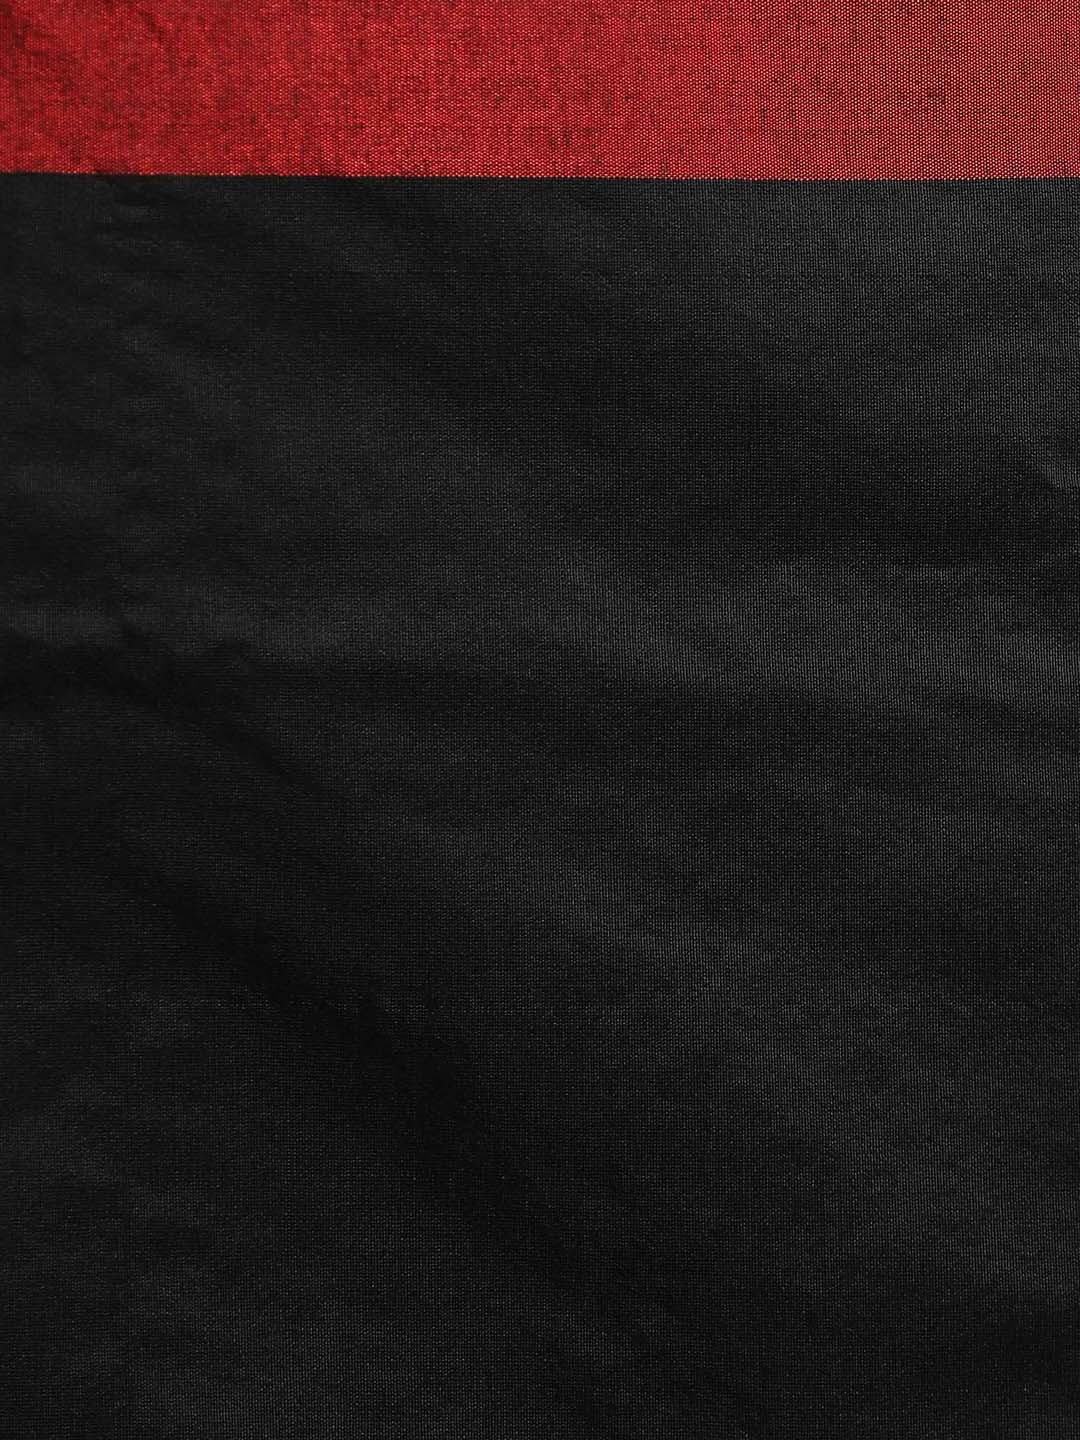 Indethnic Black and Orange Solid Colour Blocked Saree - Saree Detail View